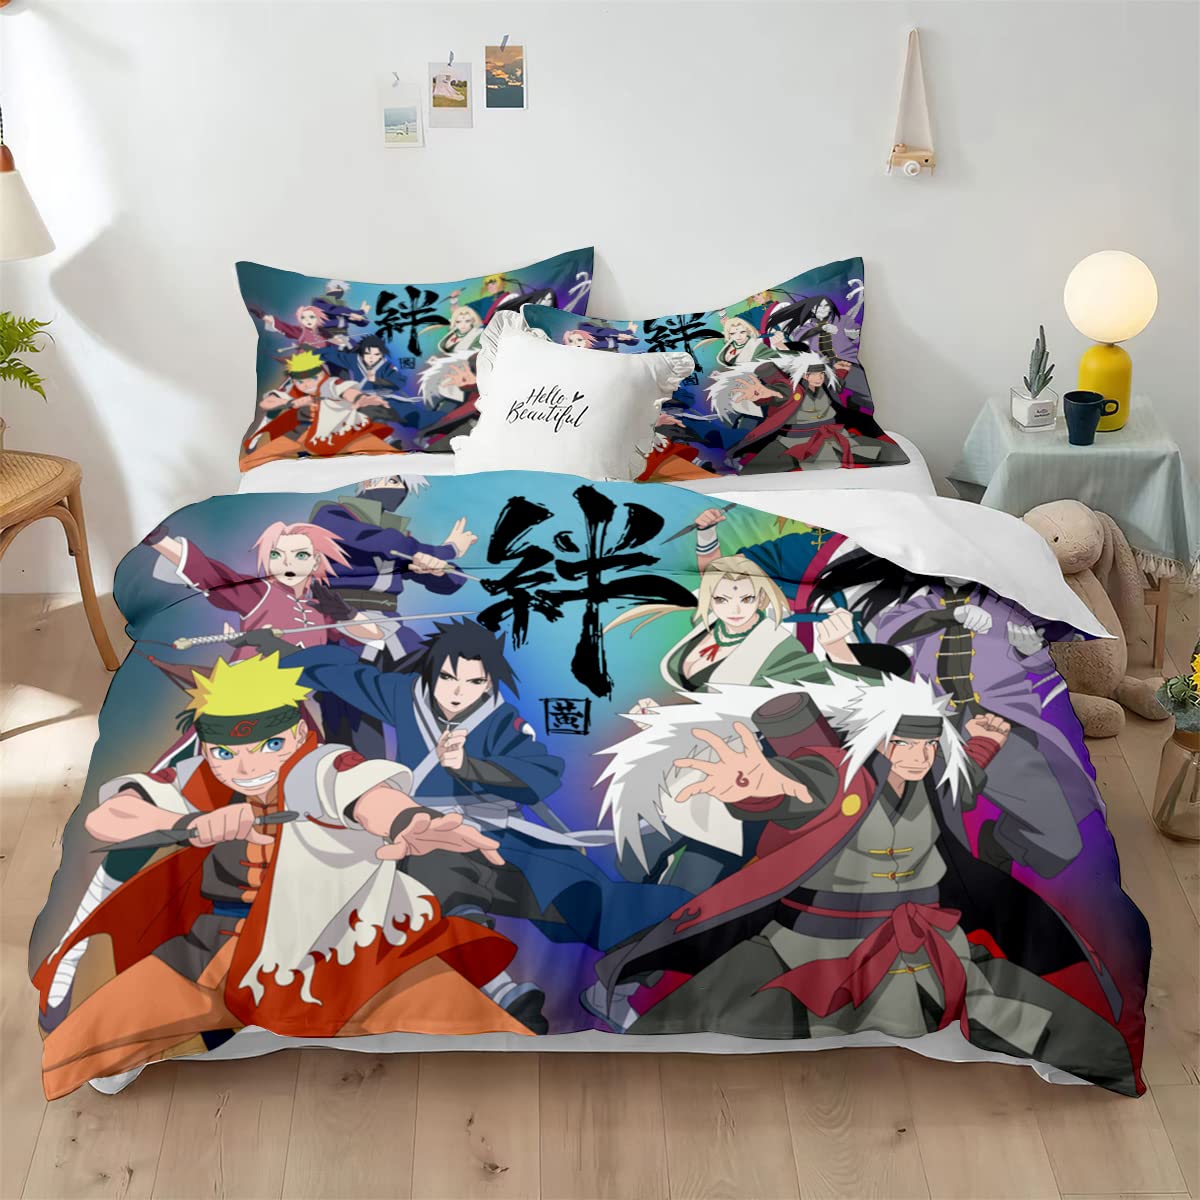 Bedding Sets : Dakimakura us,anime body pillow,anime dakimakura pillow  shop,custom waifu pillow US online store World Wide Free shipping,  www.dakimakura.us